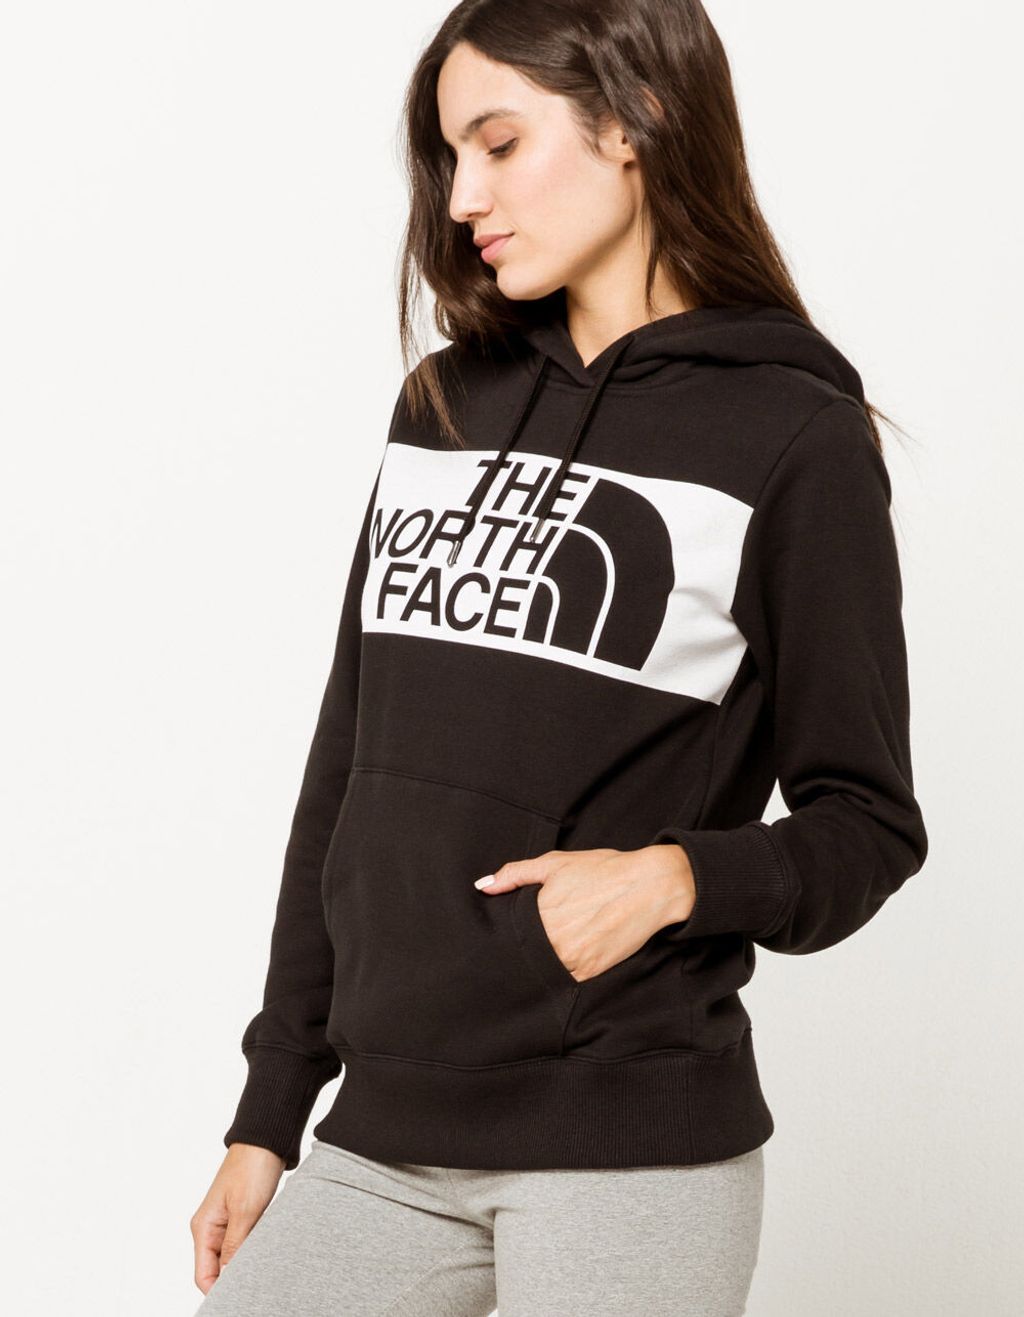 THE NORTH FACE Edge to Edge Womens Sweatshirt $23+tax